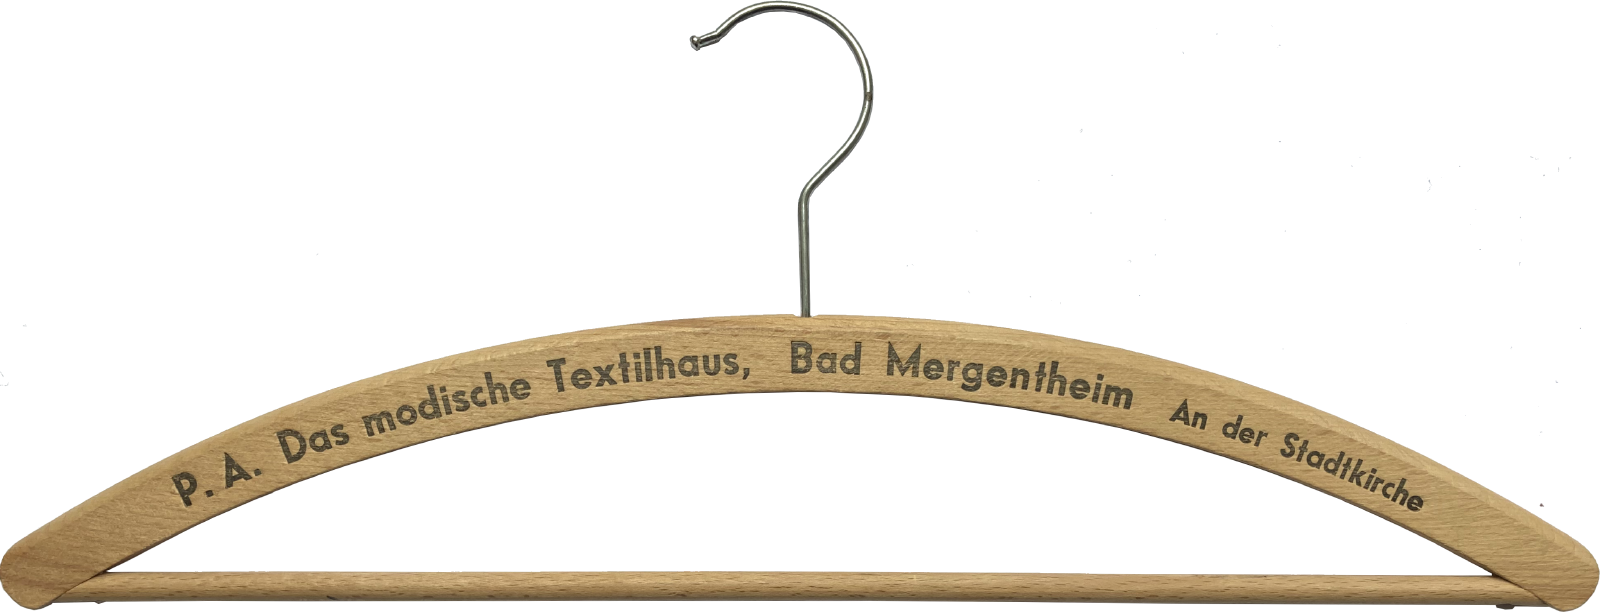 P.A. Das modische Textilhaus, Bad Mergentheim An der Stadtkirche